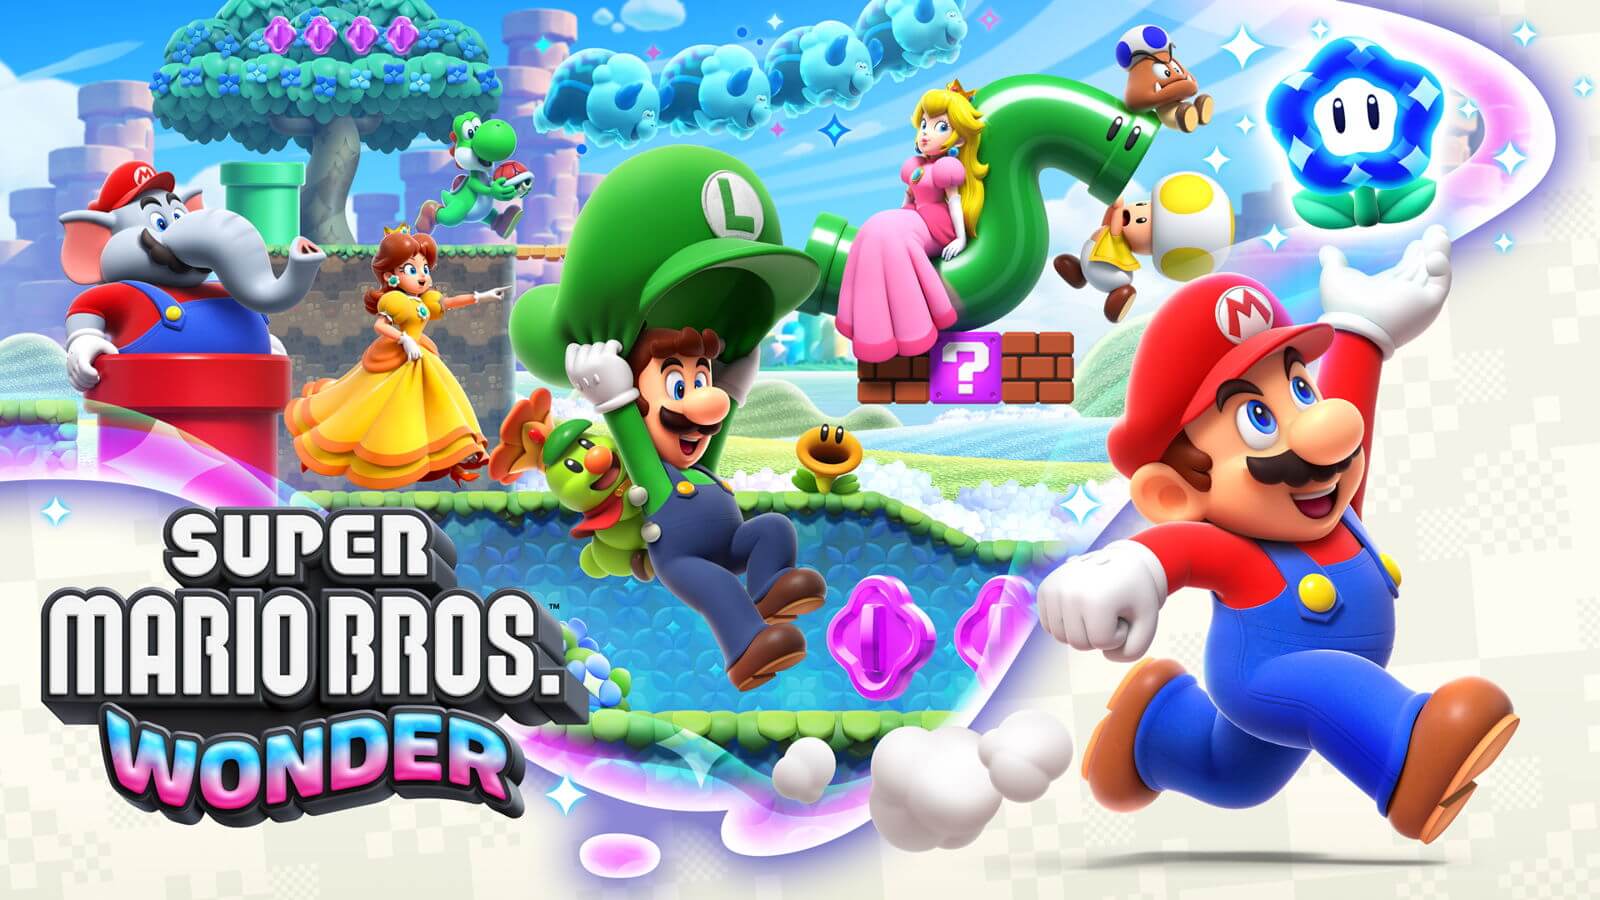 Super Mario Bros. Wonder video game